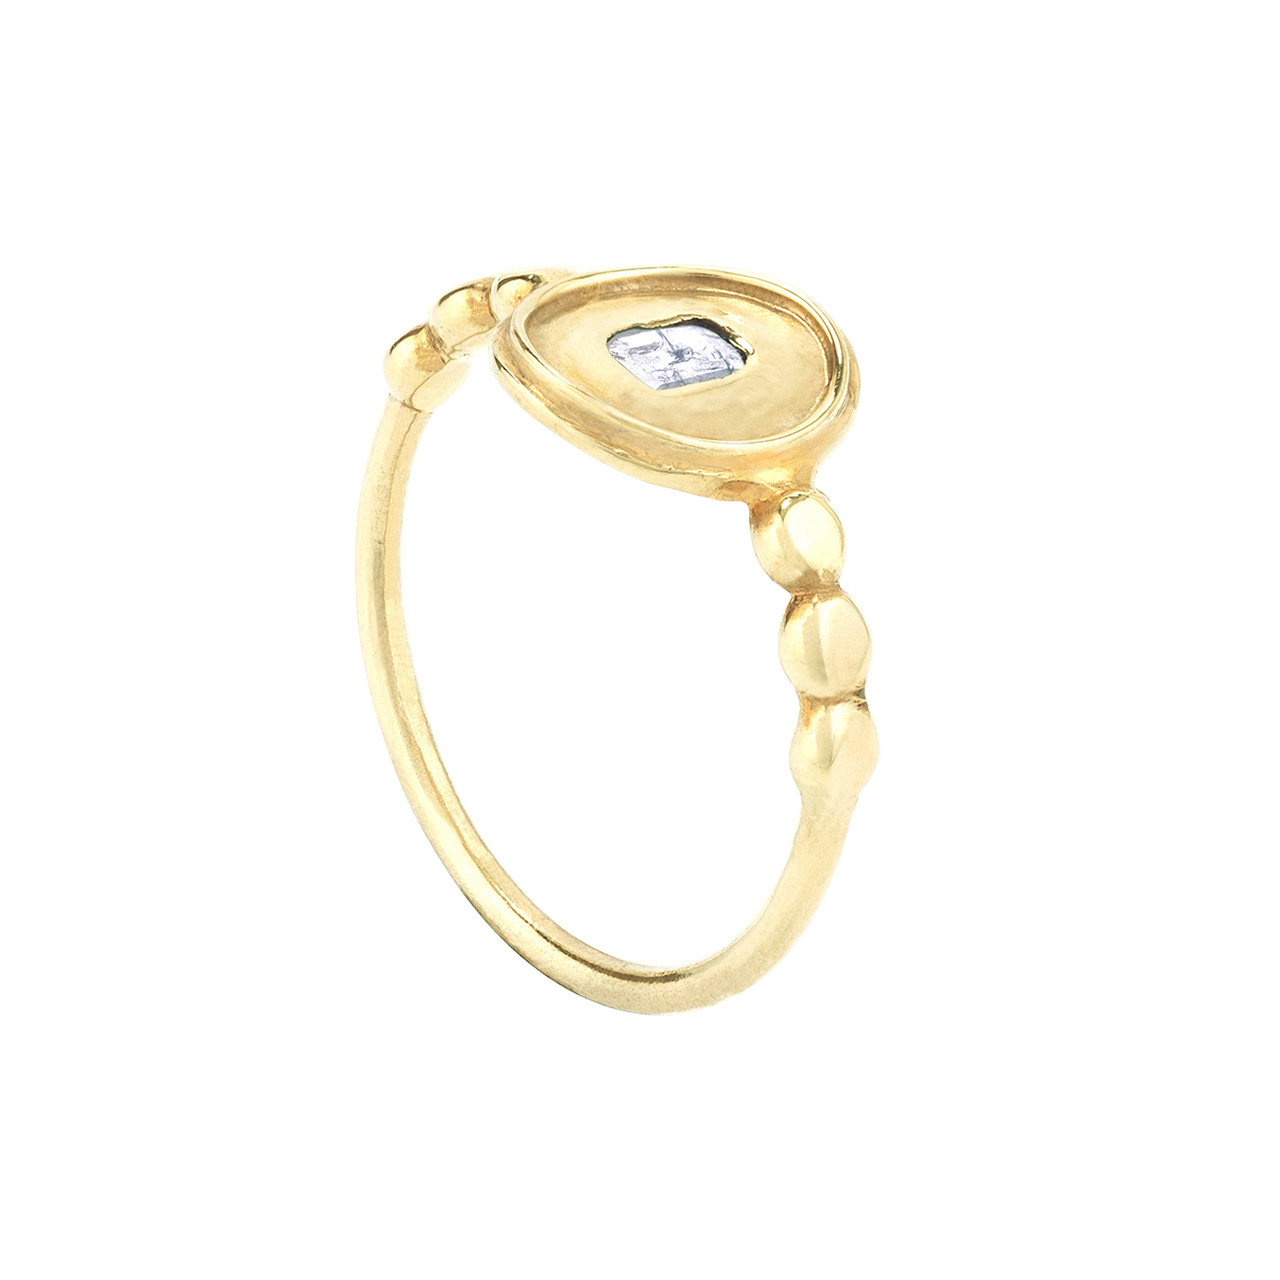 N° 689 Gold & Polki Diamond Ring, Marie Laure Chamorel, tomfoolery